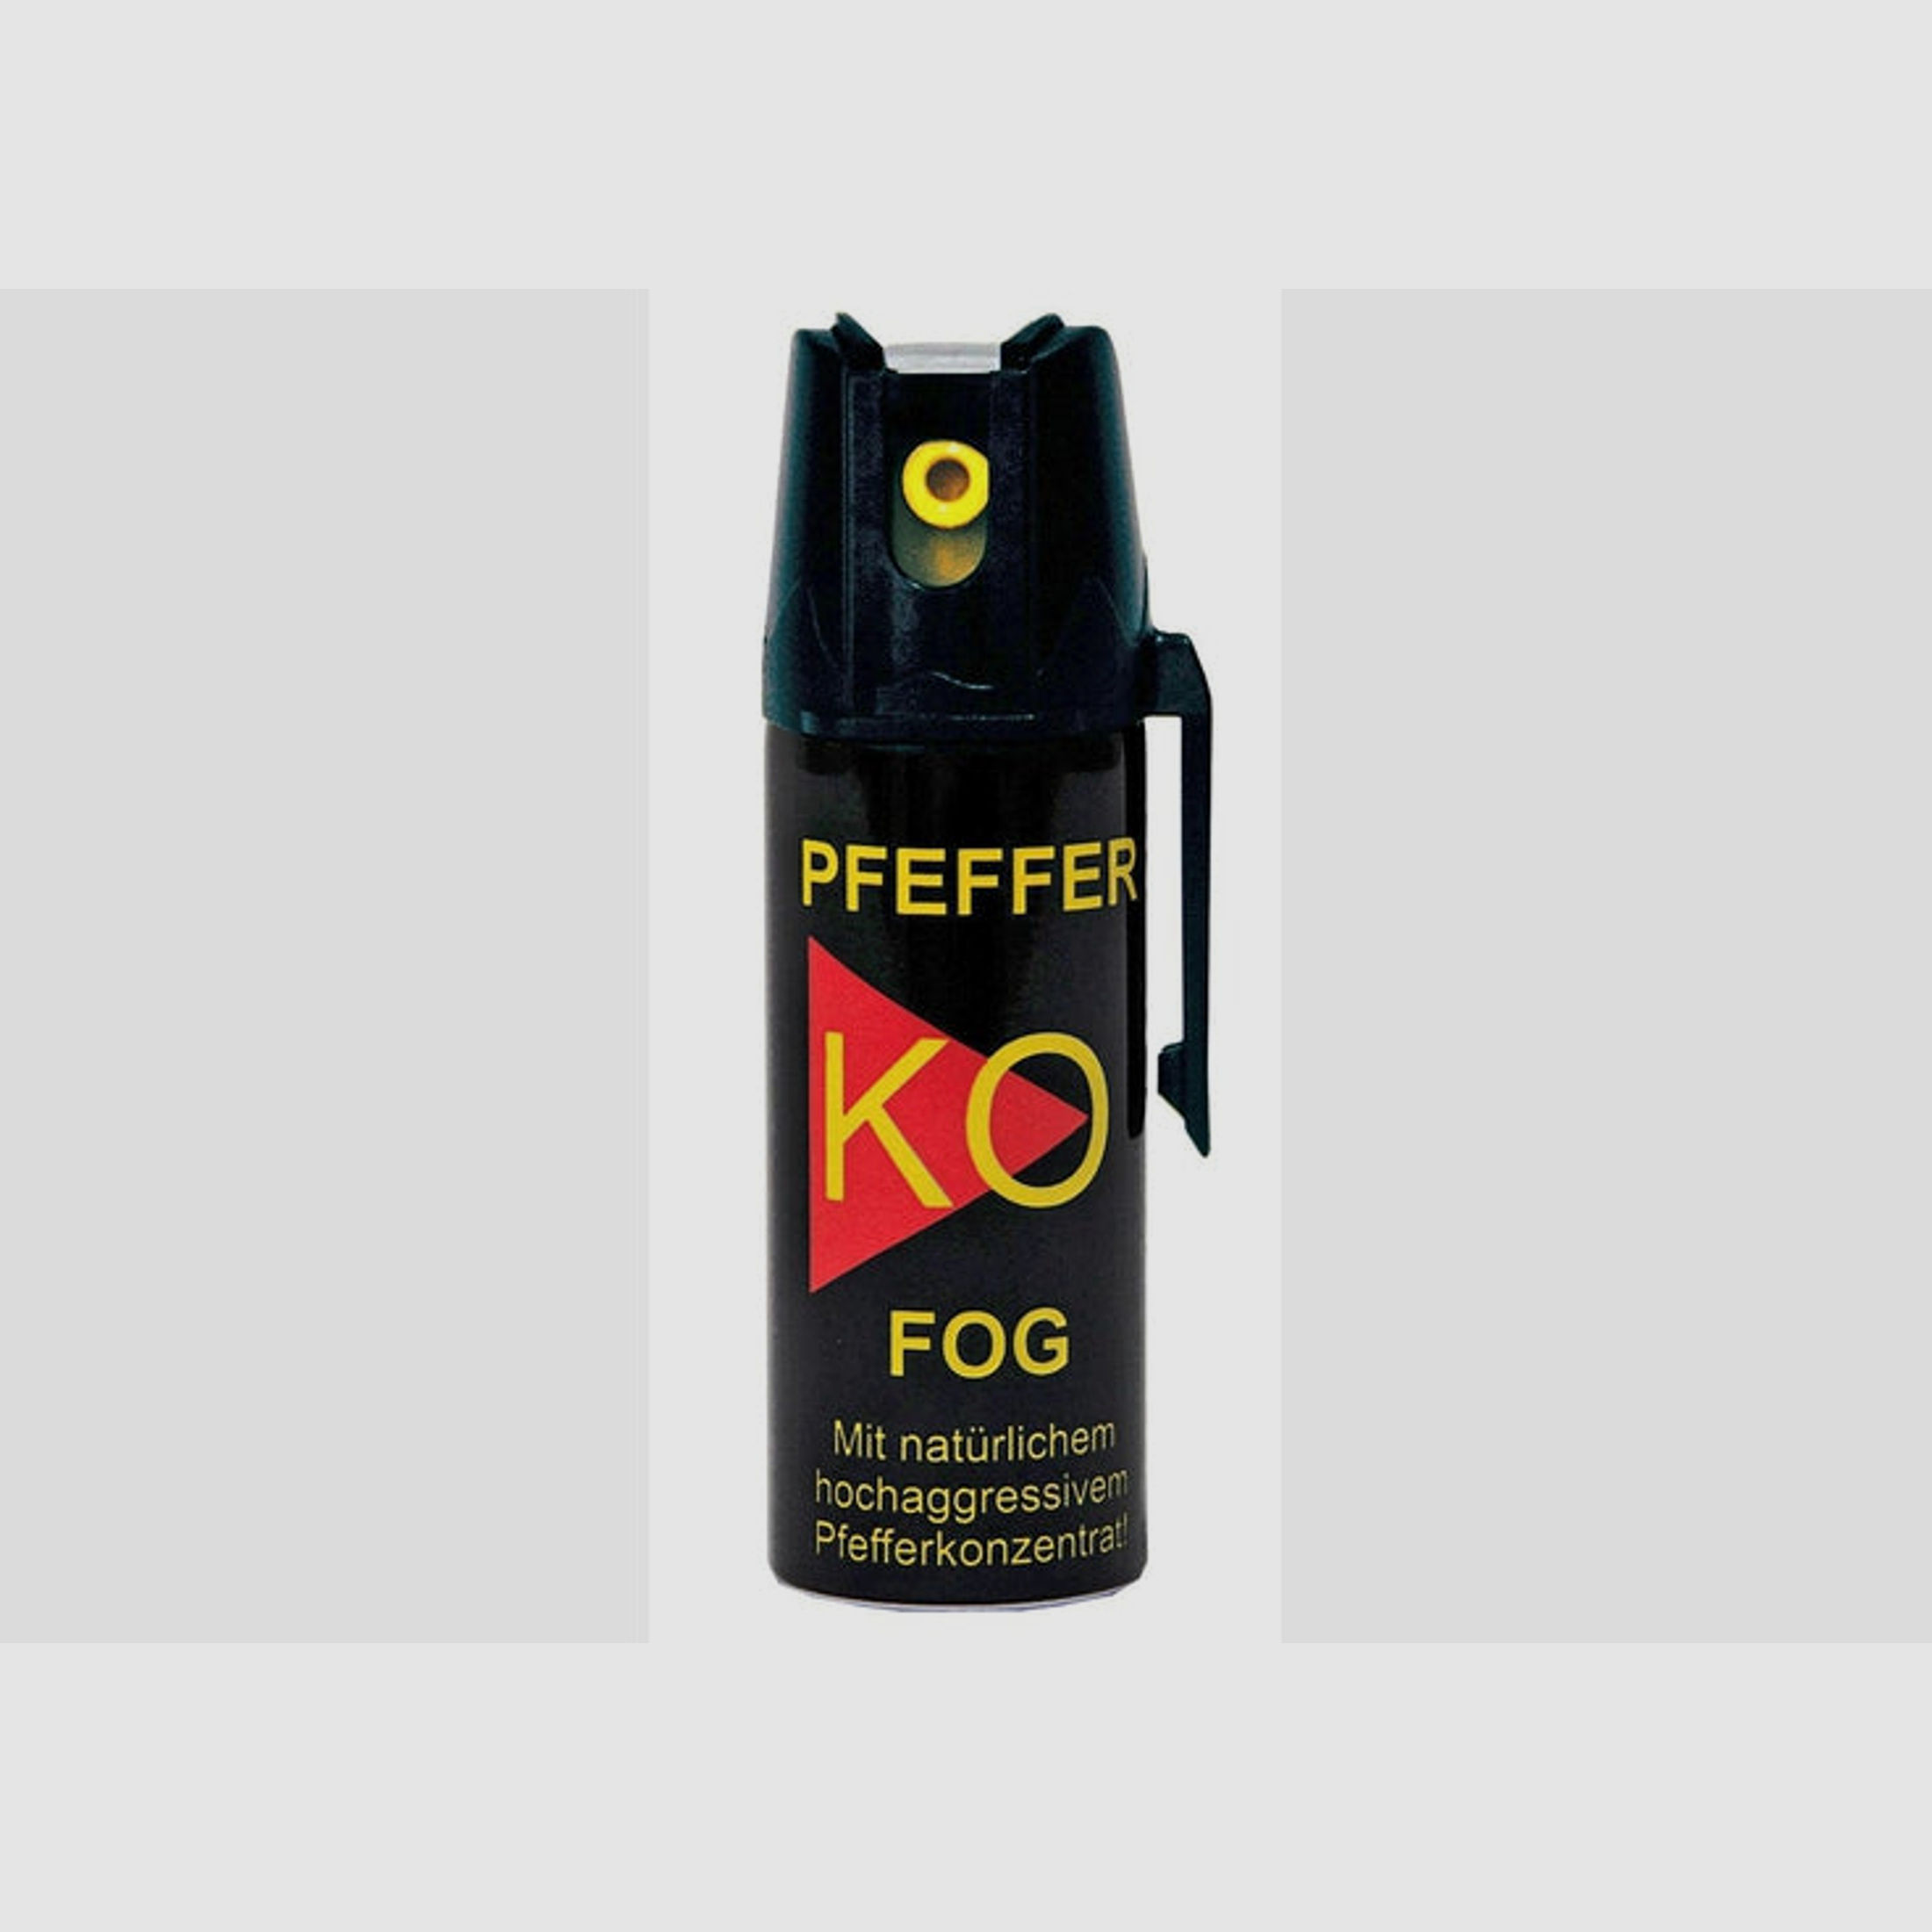 Ballistol Pfefferspray / Tierabwehrspray "KO FOG" 50 ml